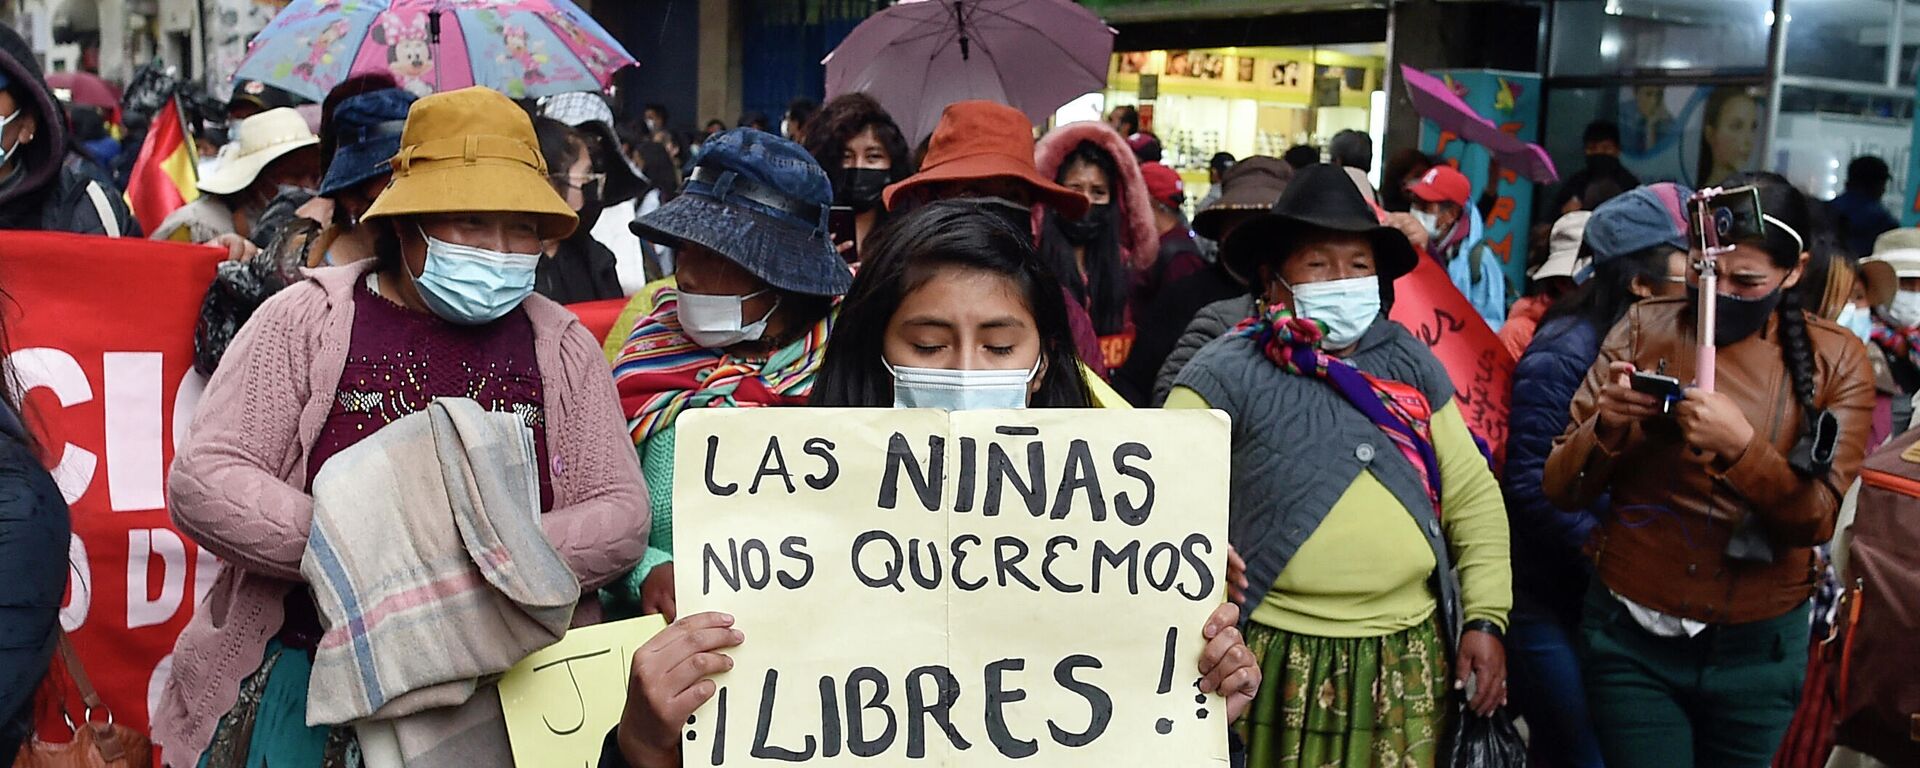 Las protestas contra feminicidios en Bolivia - Sputnik Mundo, 1920, 08.02.2022